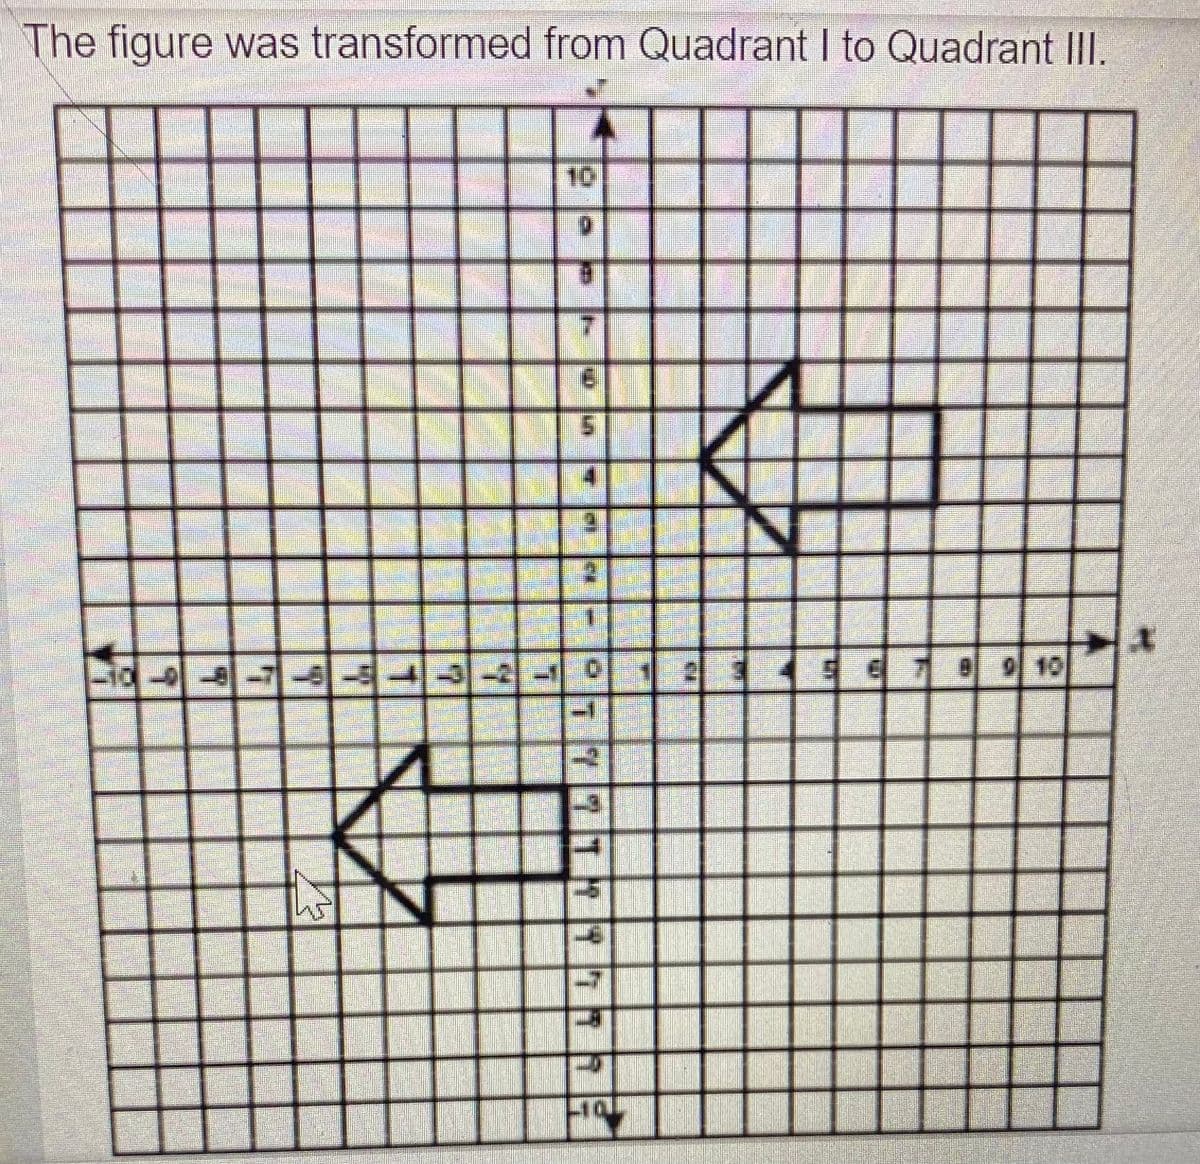 The figure was transformed from Quadrant I to Quadrant II.
10
6.
%3D
-10--8
-3-2- 0
09 10
-3
